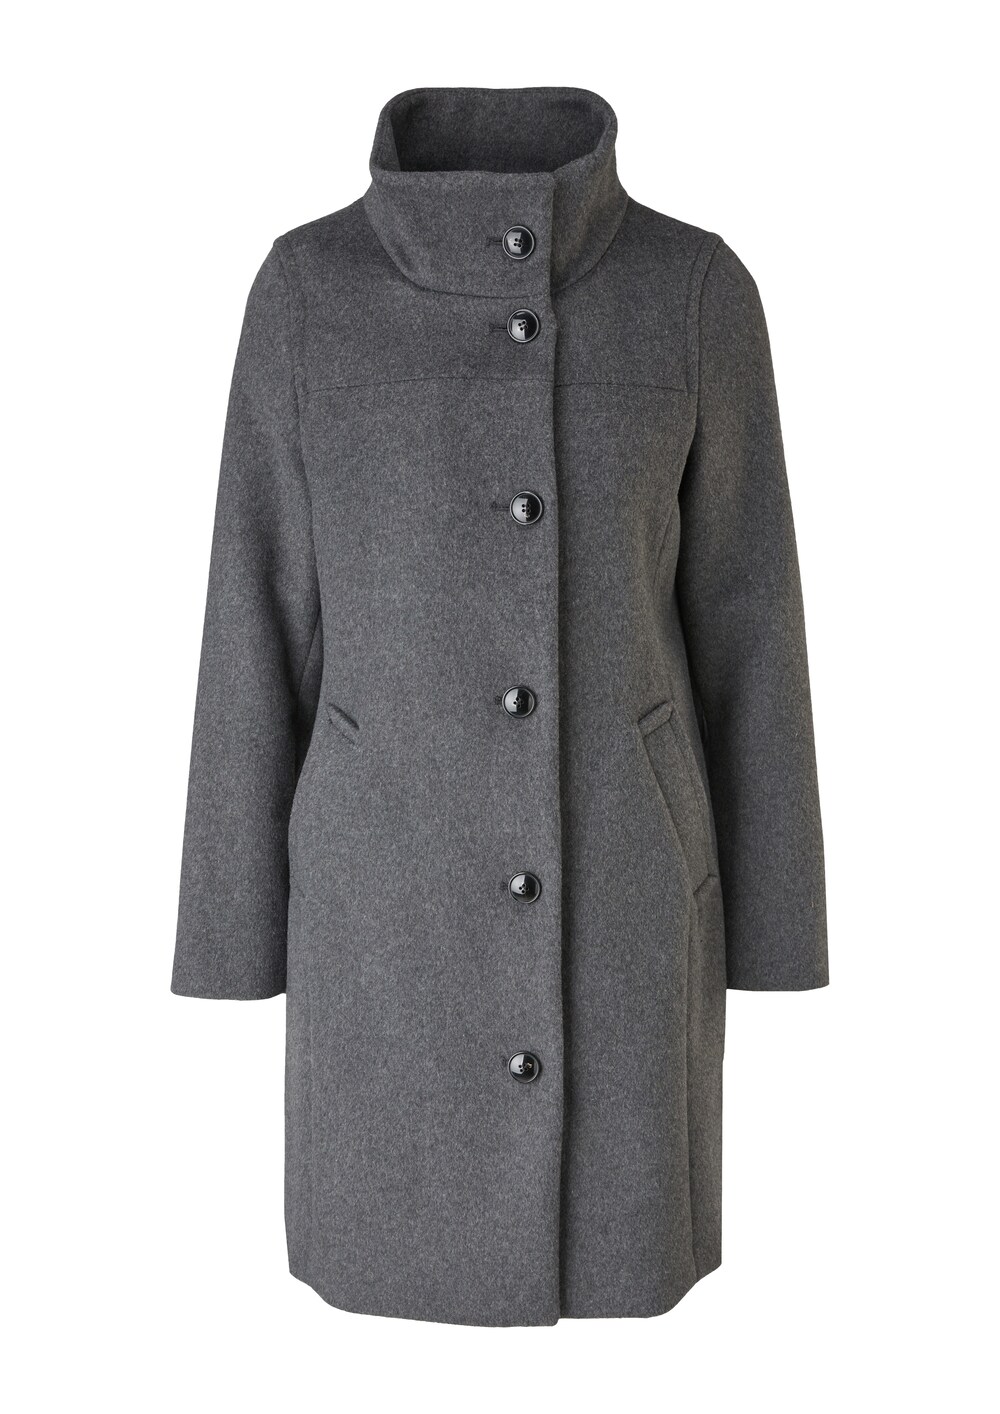 Межсезонное пальто S.Oliver, пестрый серый межсезонное пальто s oliver пестрый бежевый